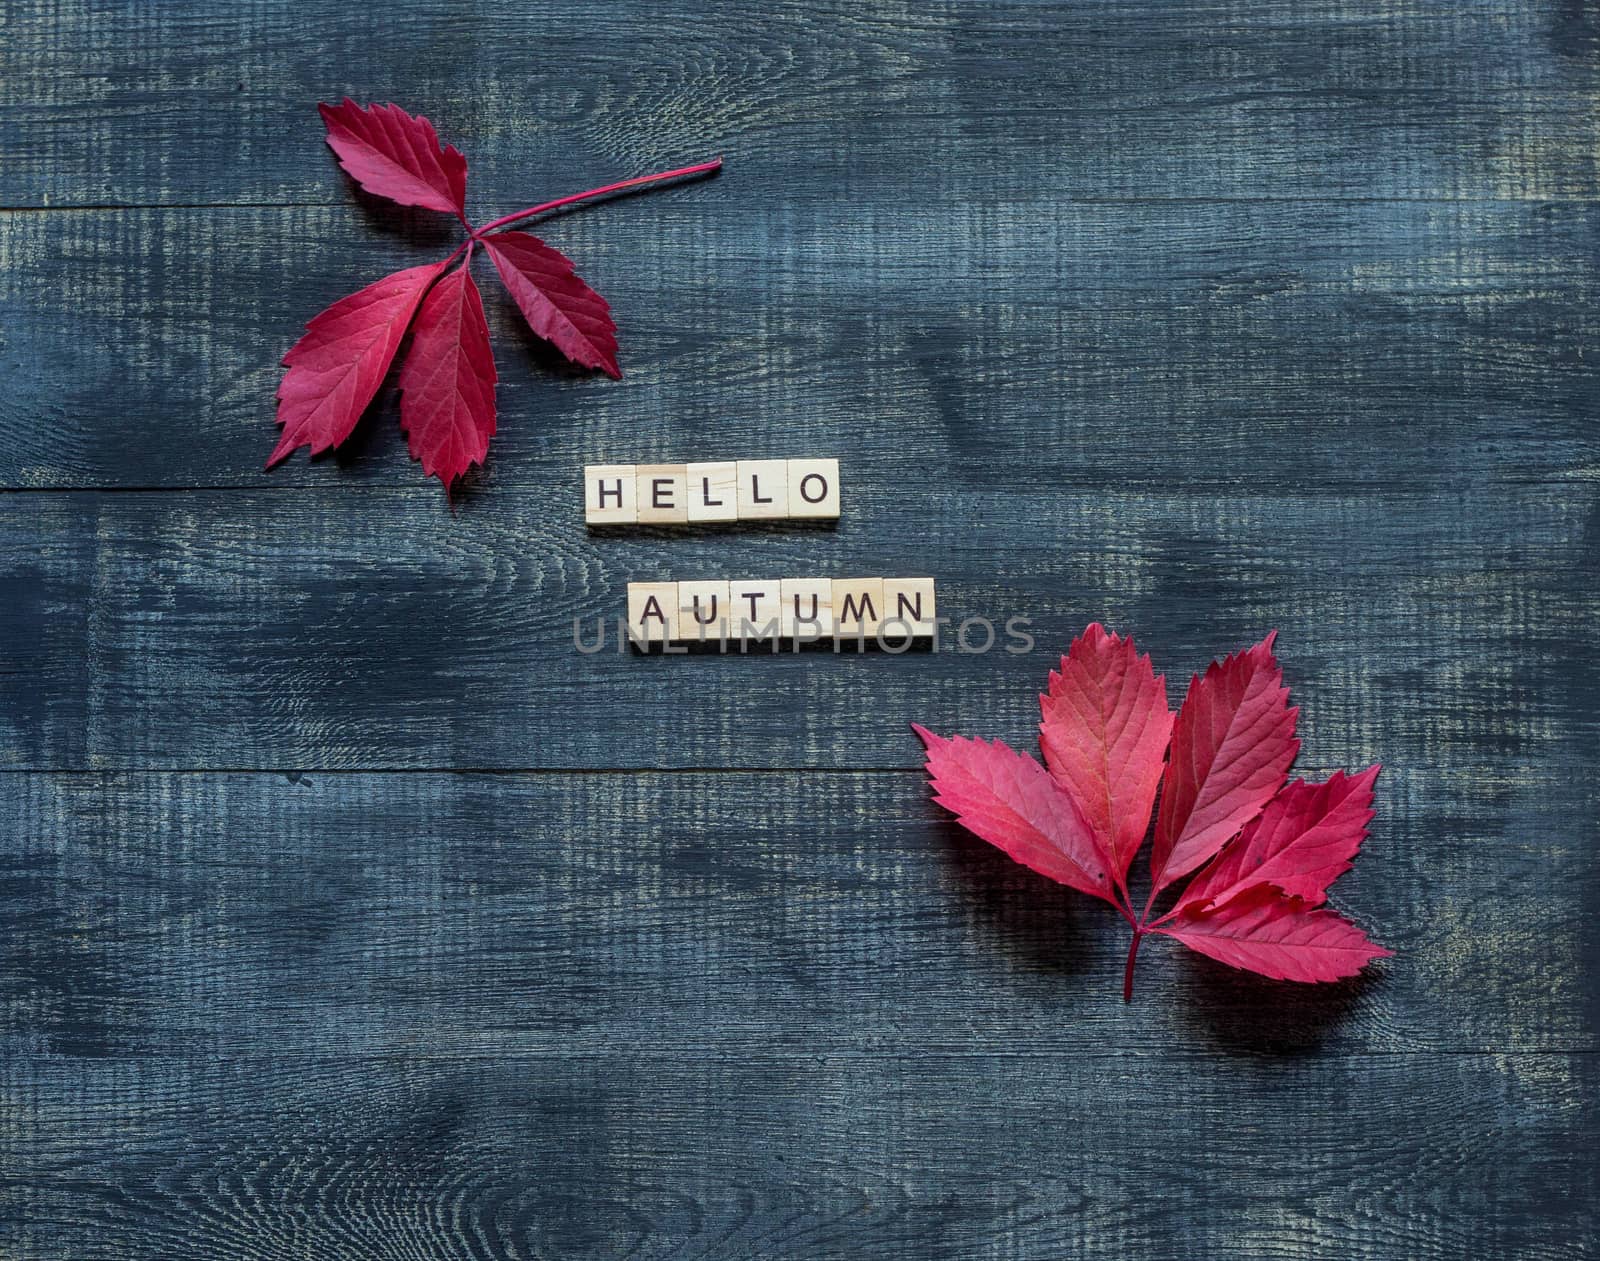 Text hello autumn framed by autumn fallen leaves on a dark wooden background by galinasharapova